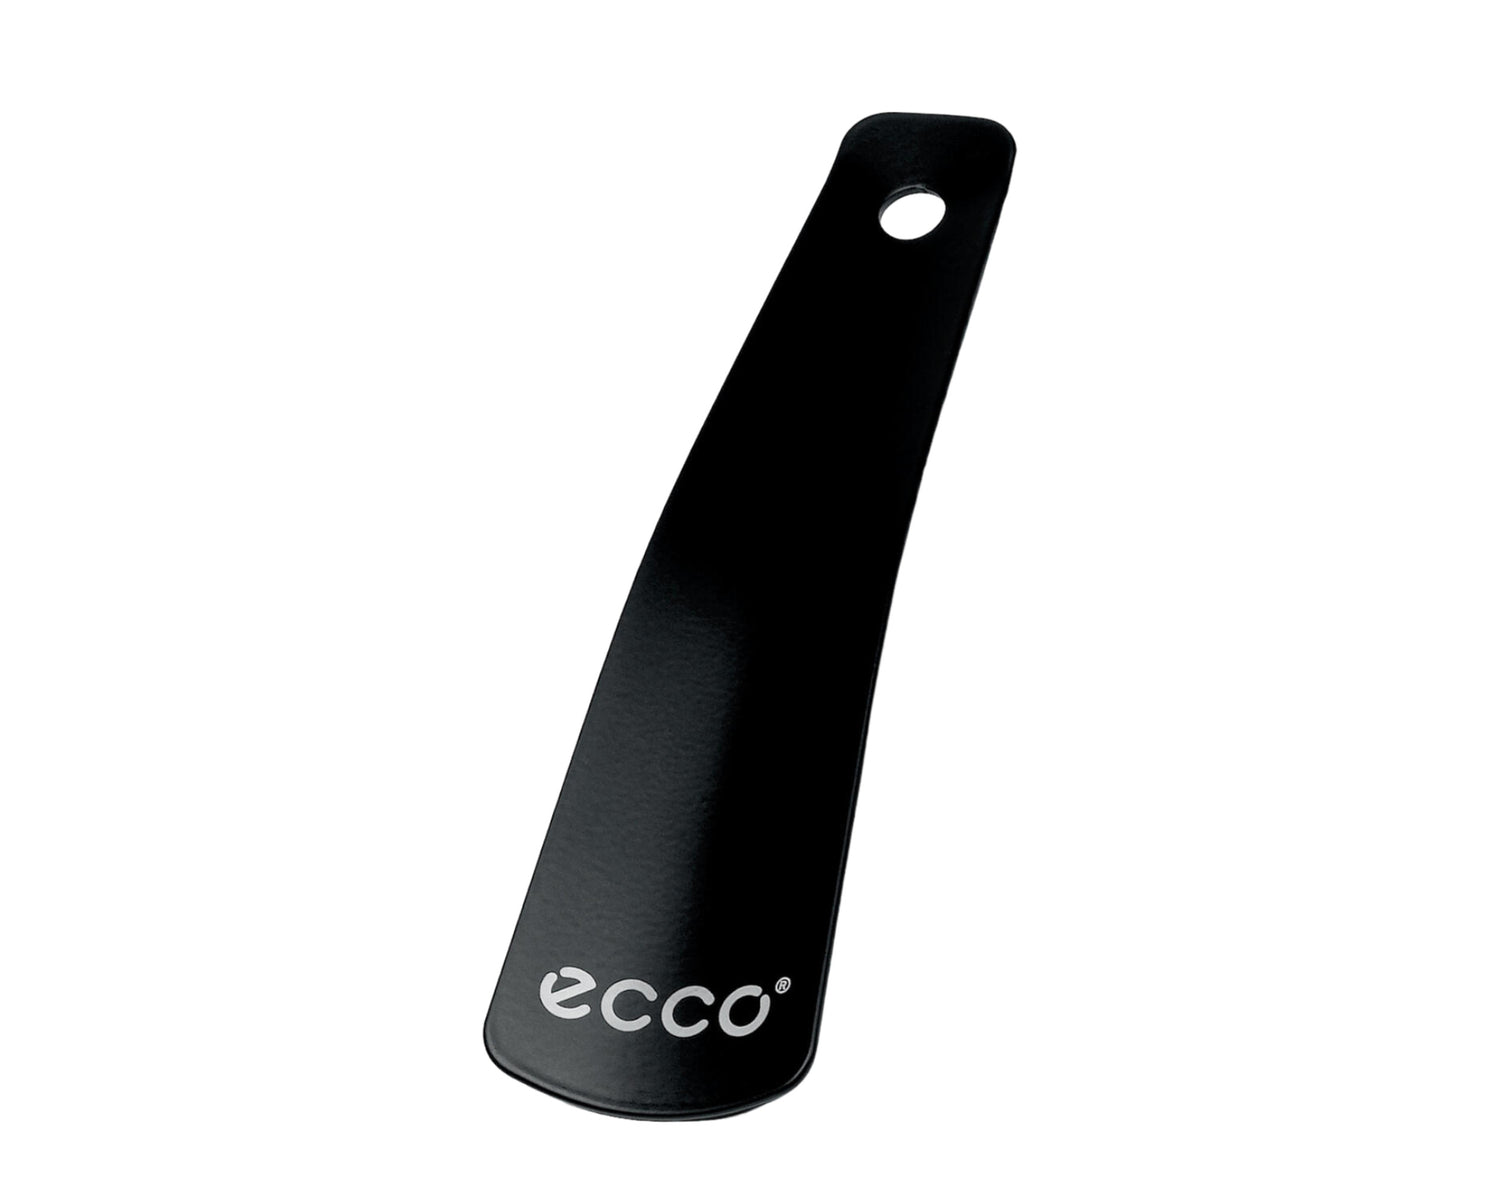 Ecco Metal Shoe Horn Small - Black